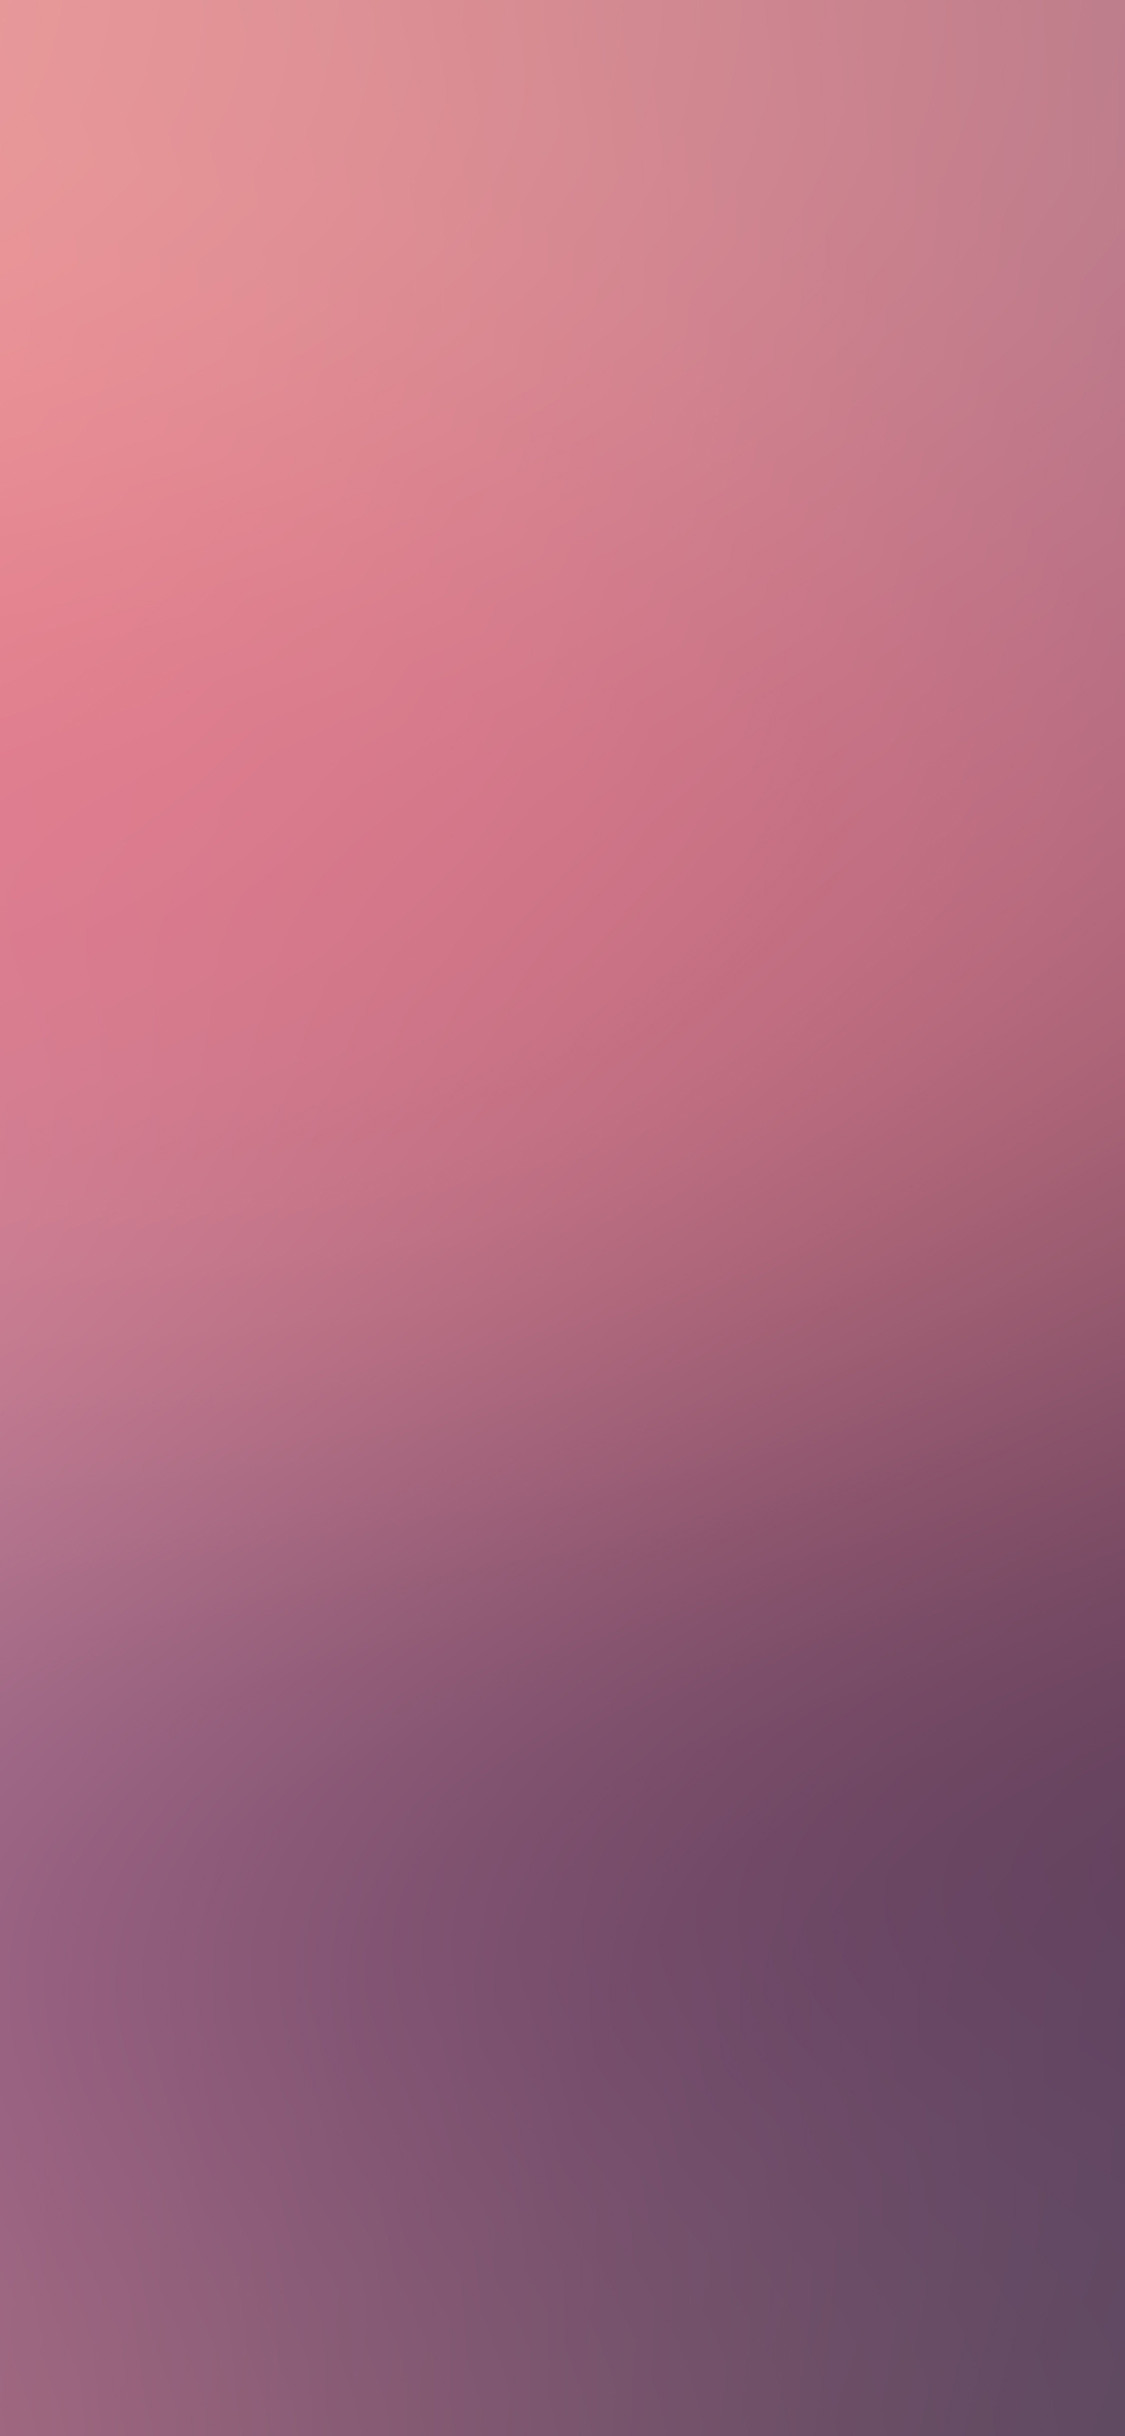 1125x2436 iPhoneXpapers.com | iPhone X wallpaper | sj66-soft-purple-pink -gradation-blur